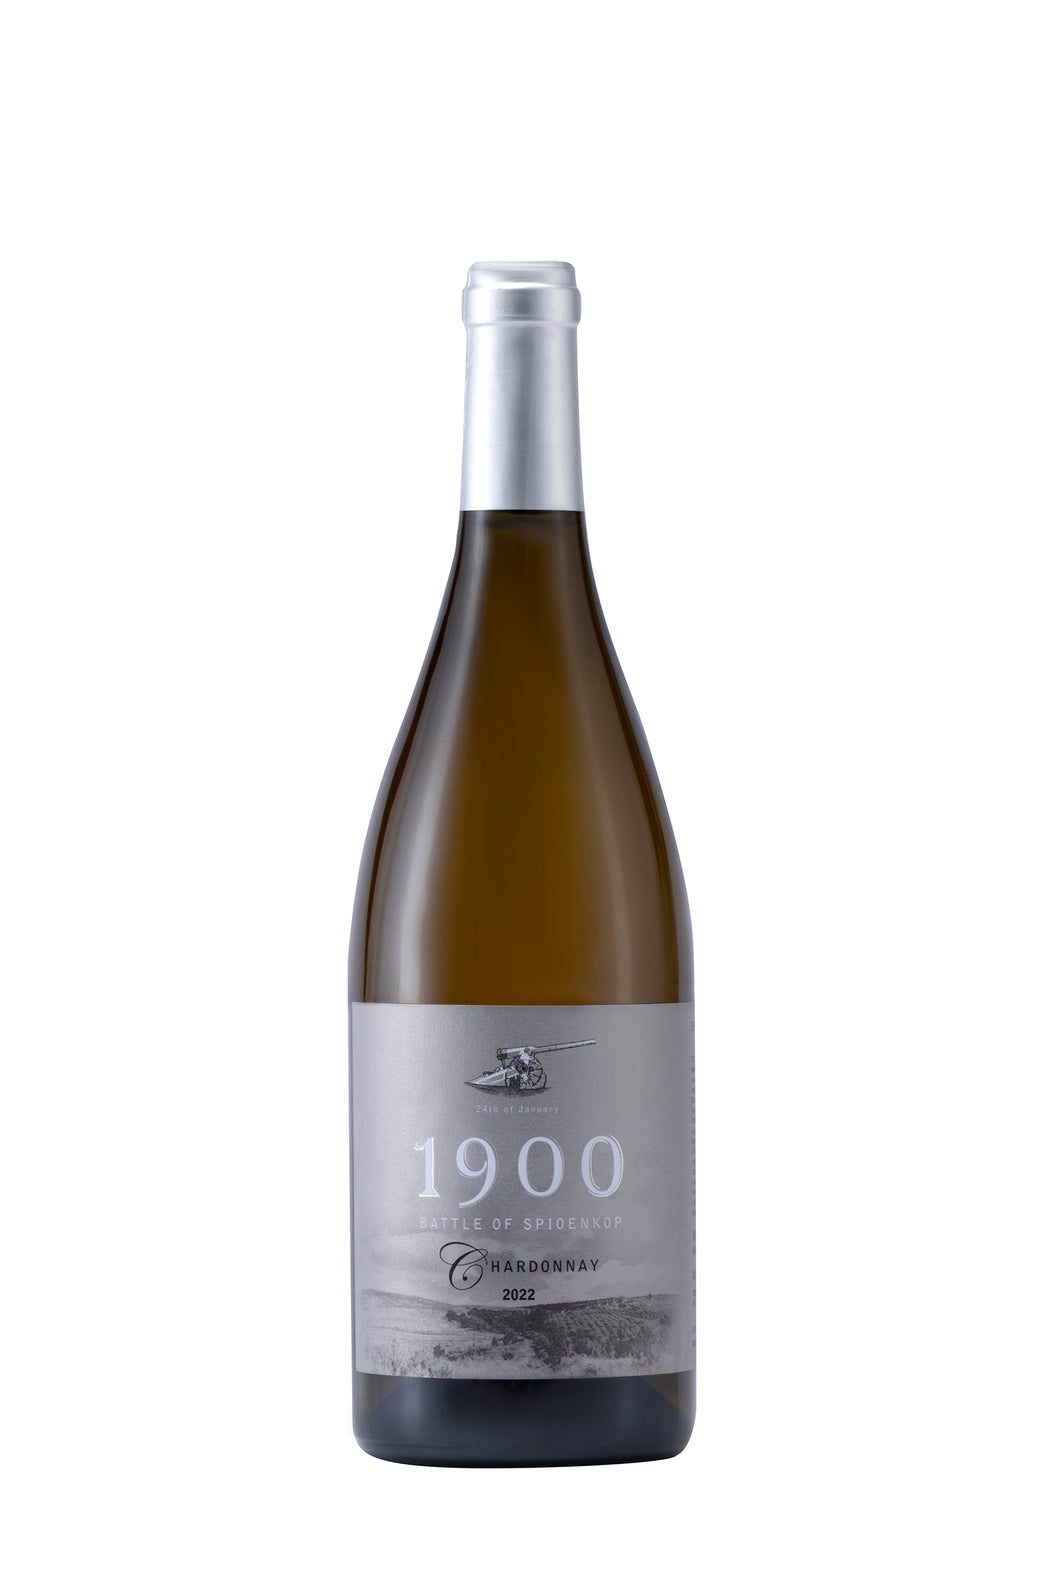 Spioenkop 1900 Chardonnay 2022 (per case of 6)